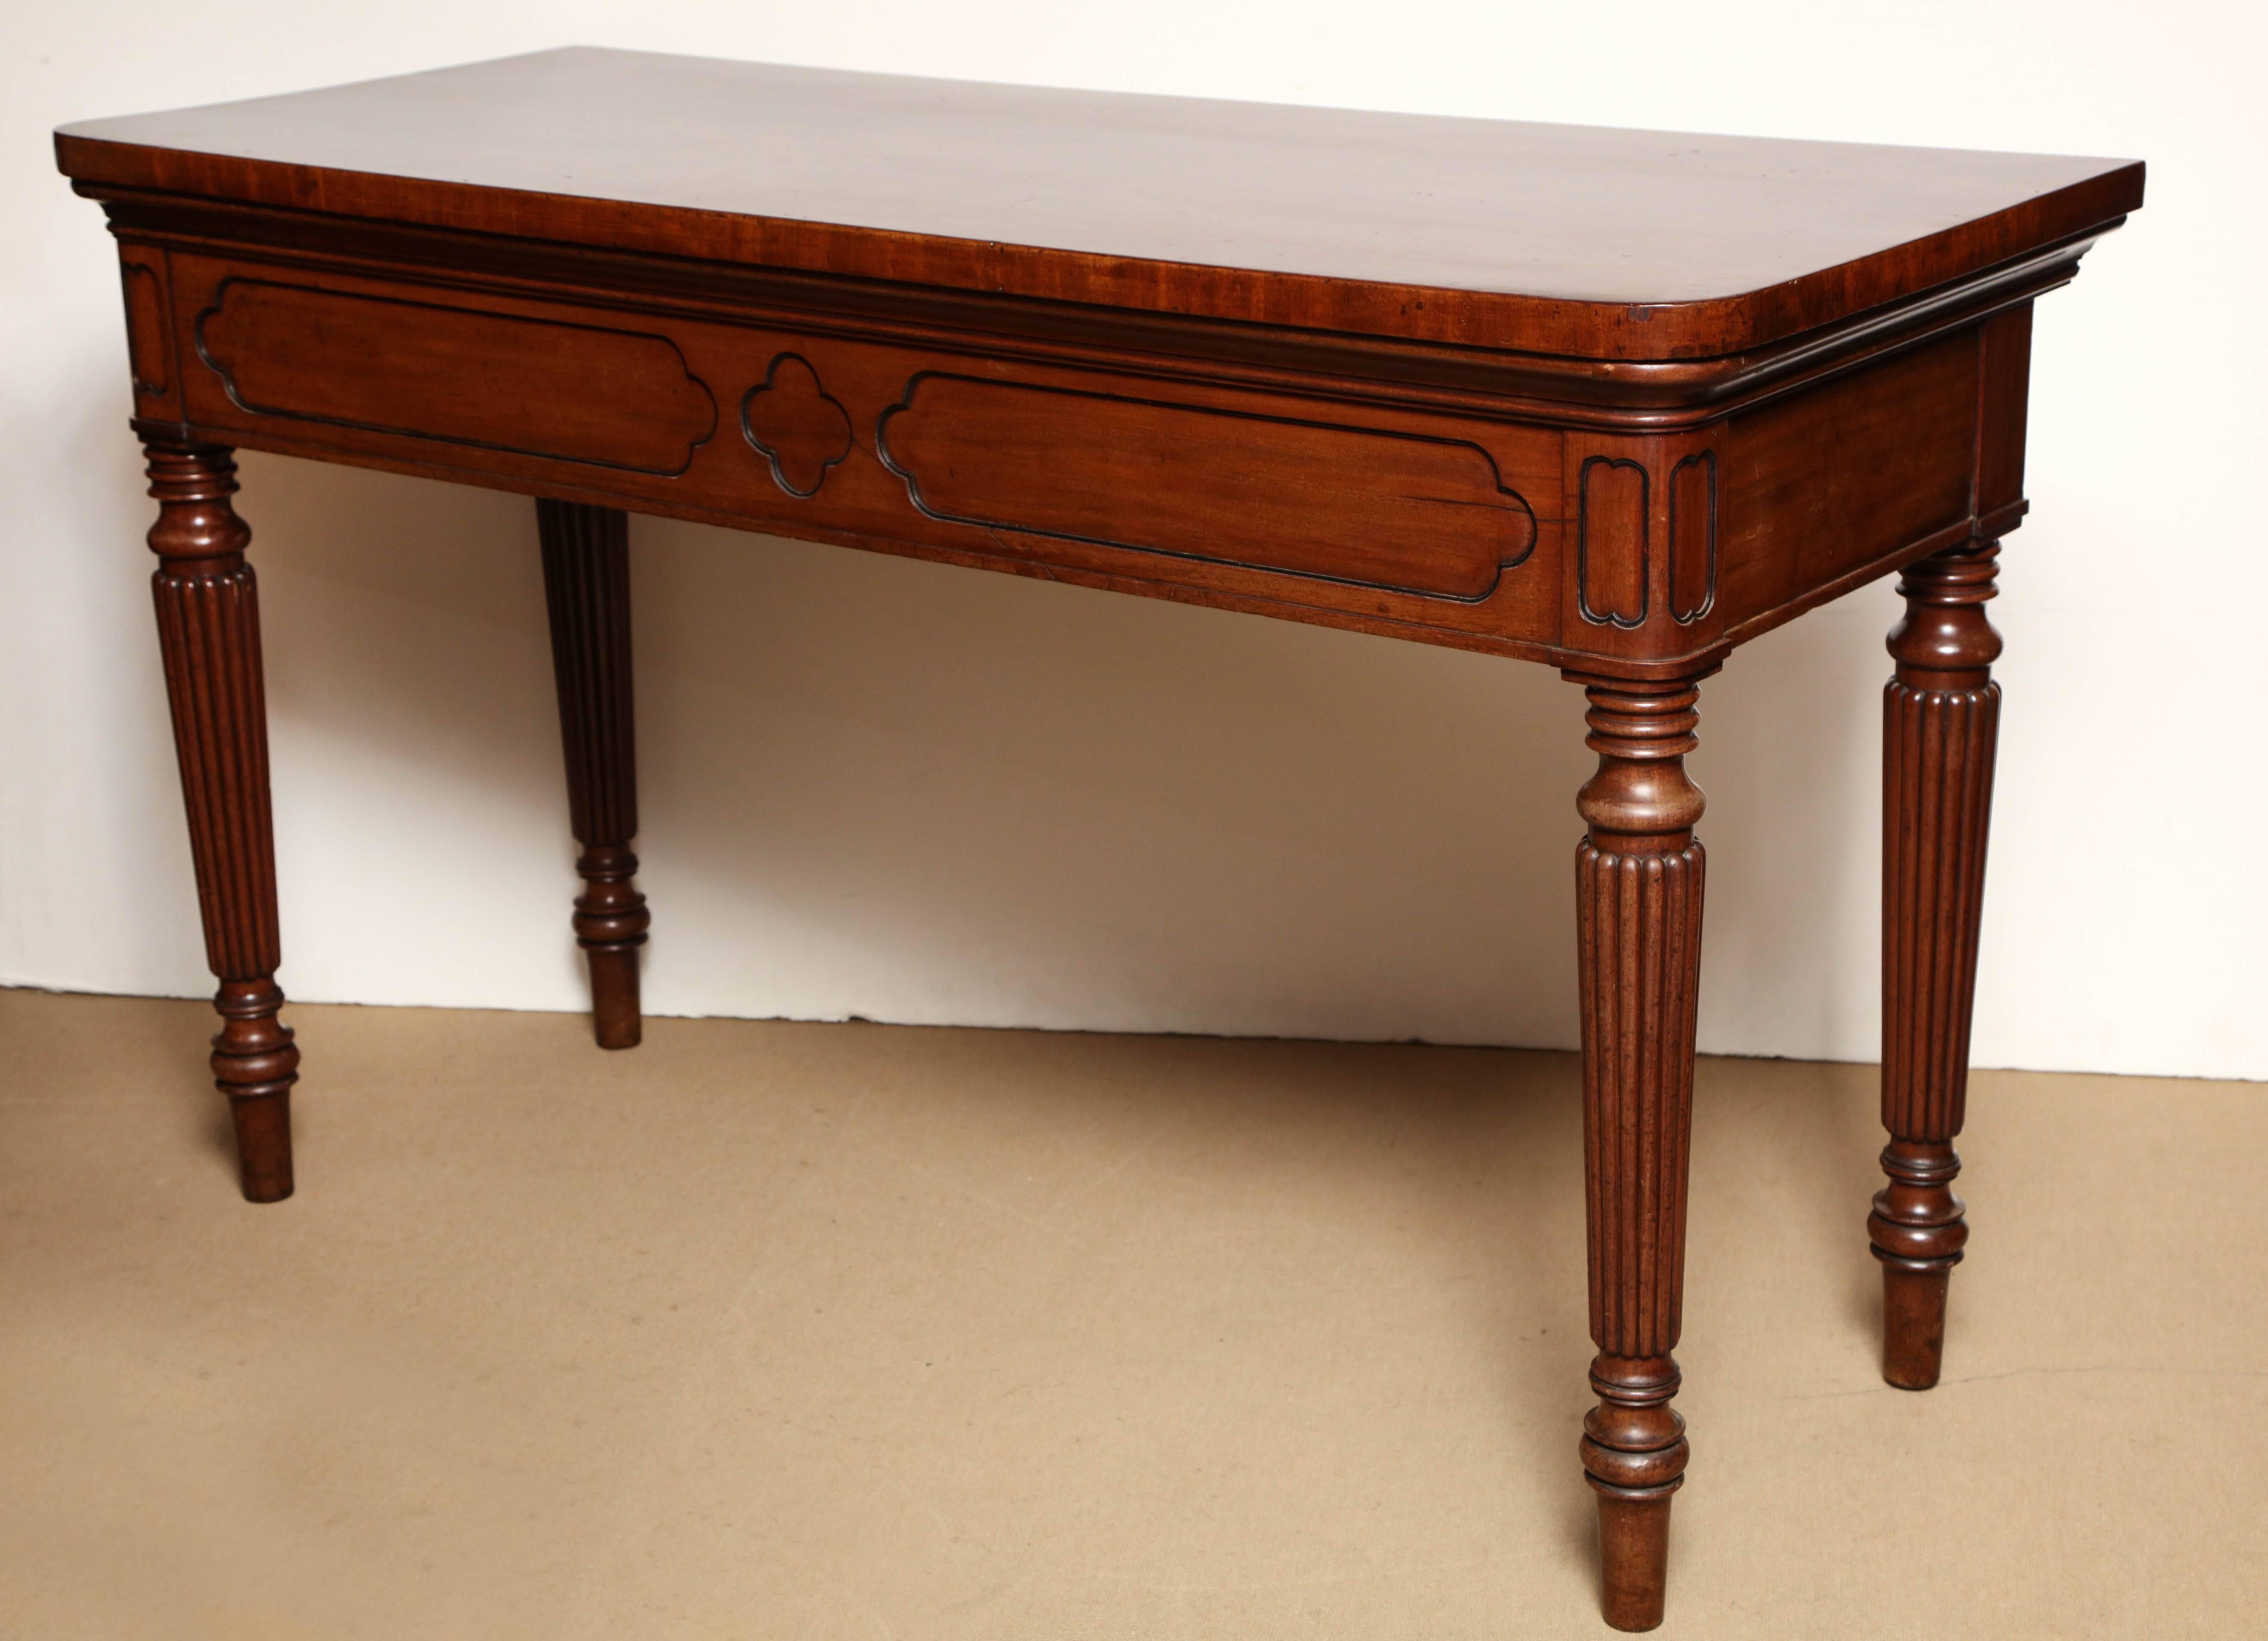 Mid-19th century Irish, mahogany serving table.
No drawer.